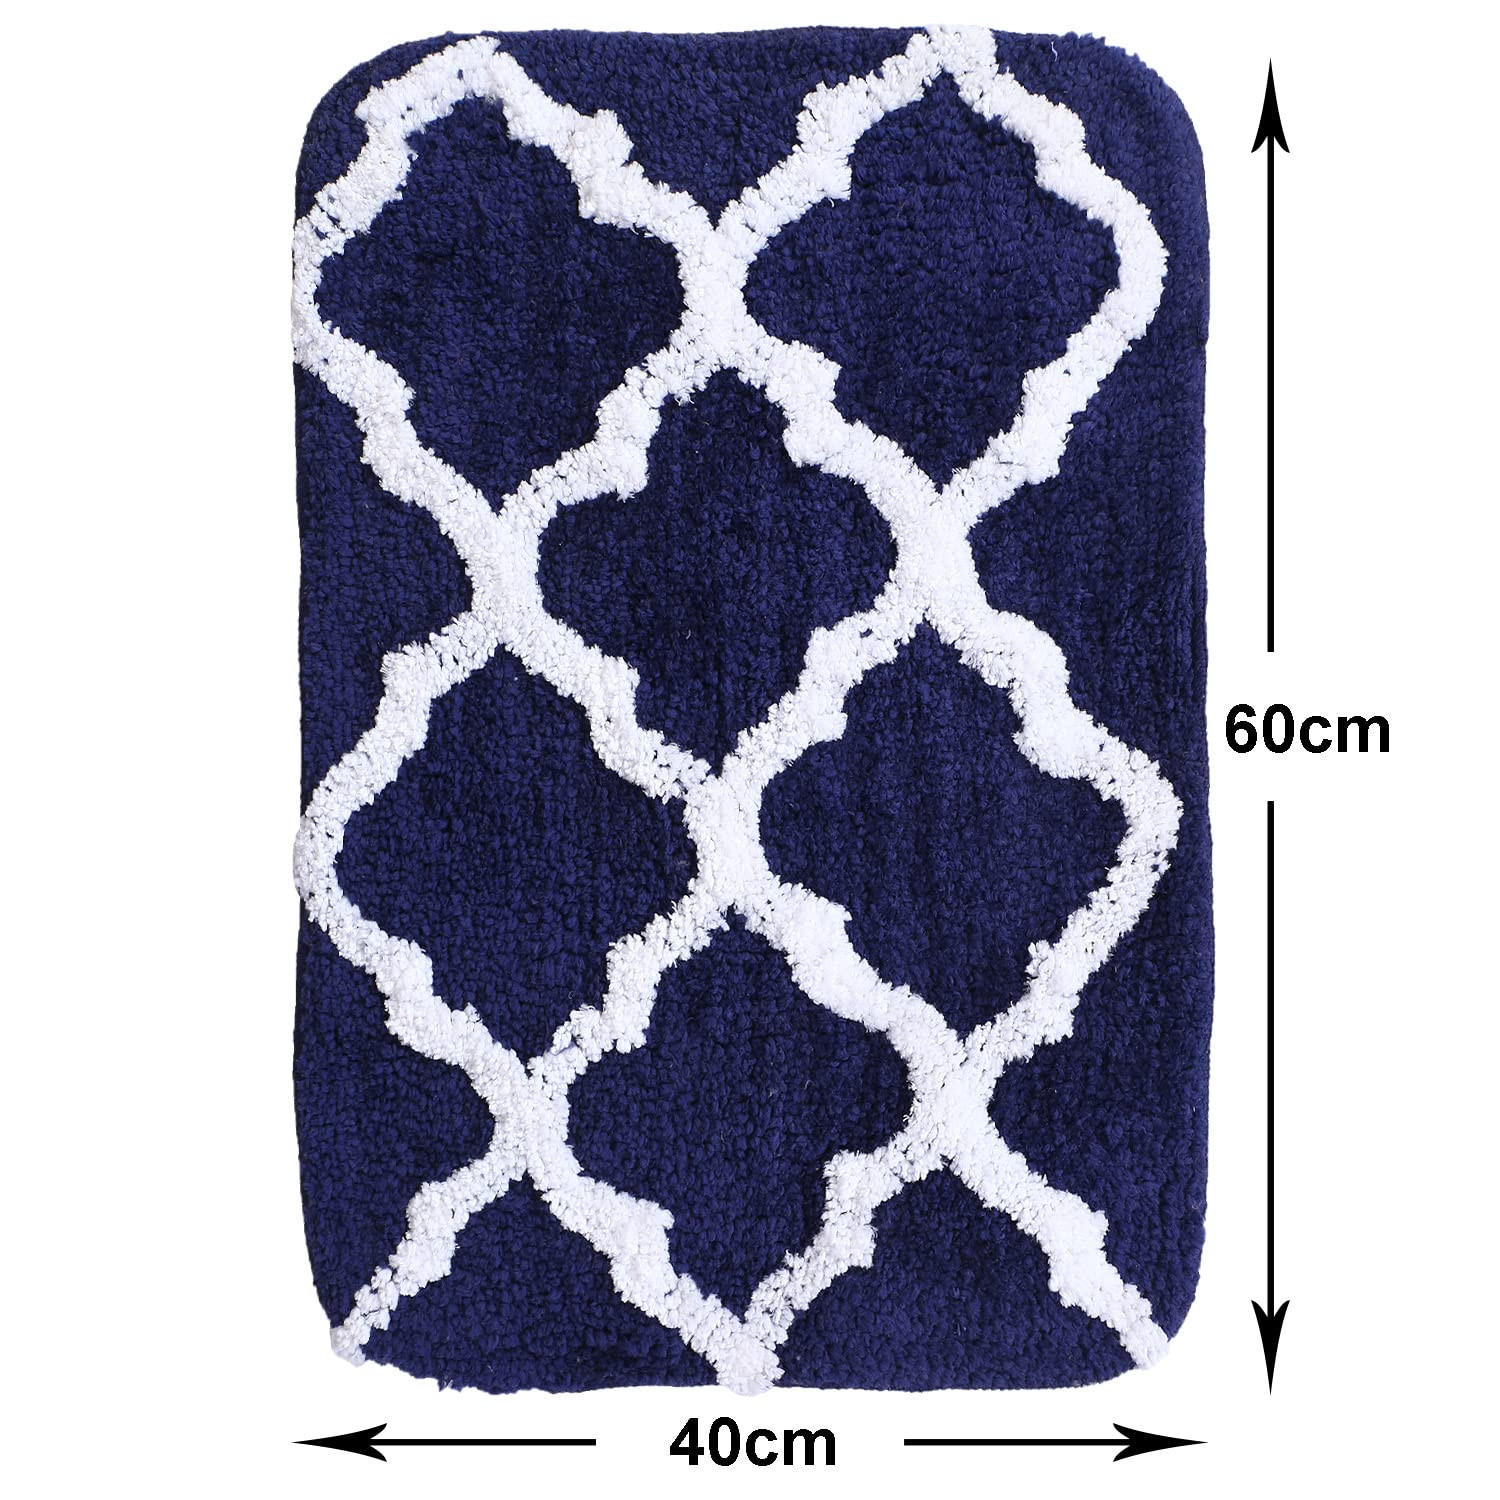 Kuber Industries Microfiber Doormats|Anti-Skid Water Absorbant Fluffy Floor mat|Geometric Pattern Entrance Mat for Kitchen,Bedside,Door,Living,Prayer Room,60x40 cm,Pack of 2 (Brown & Blue)